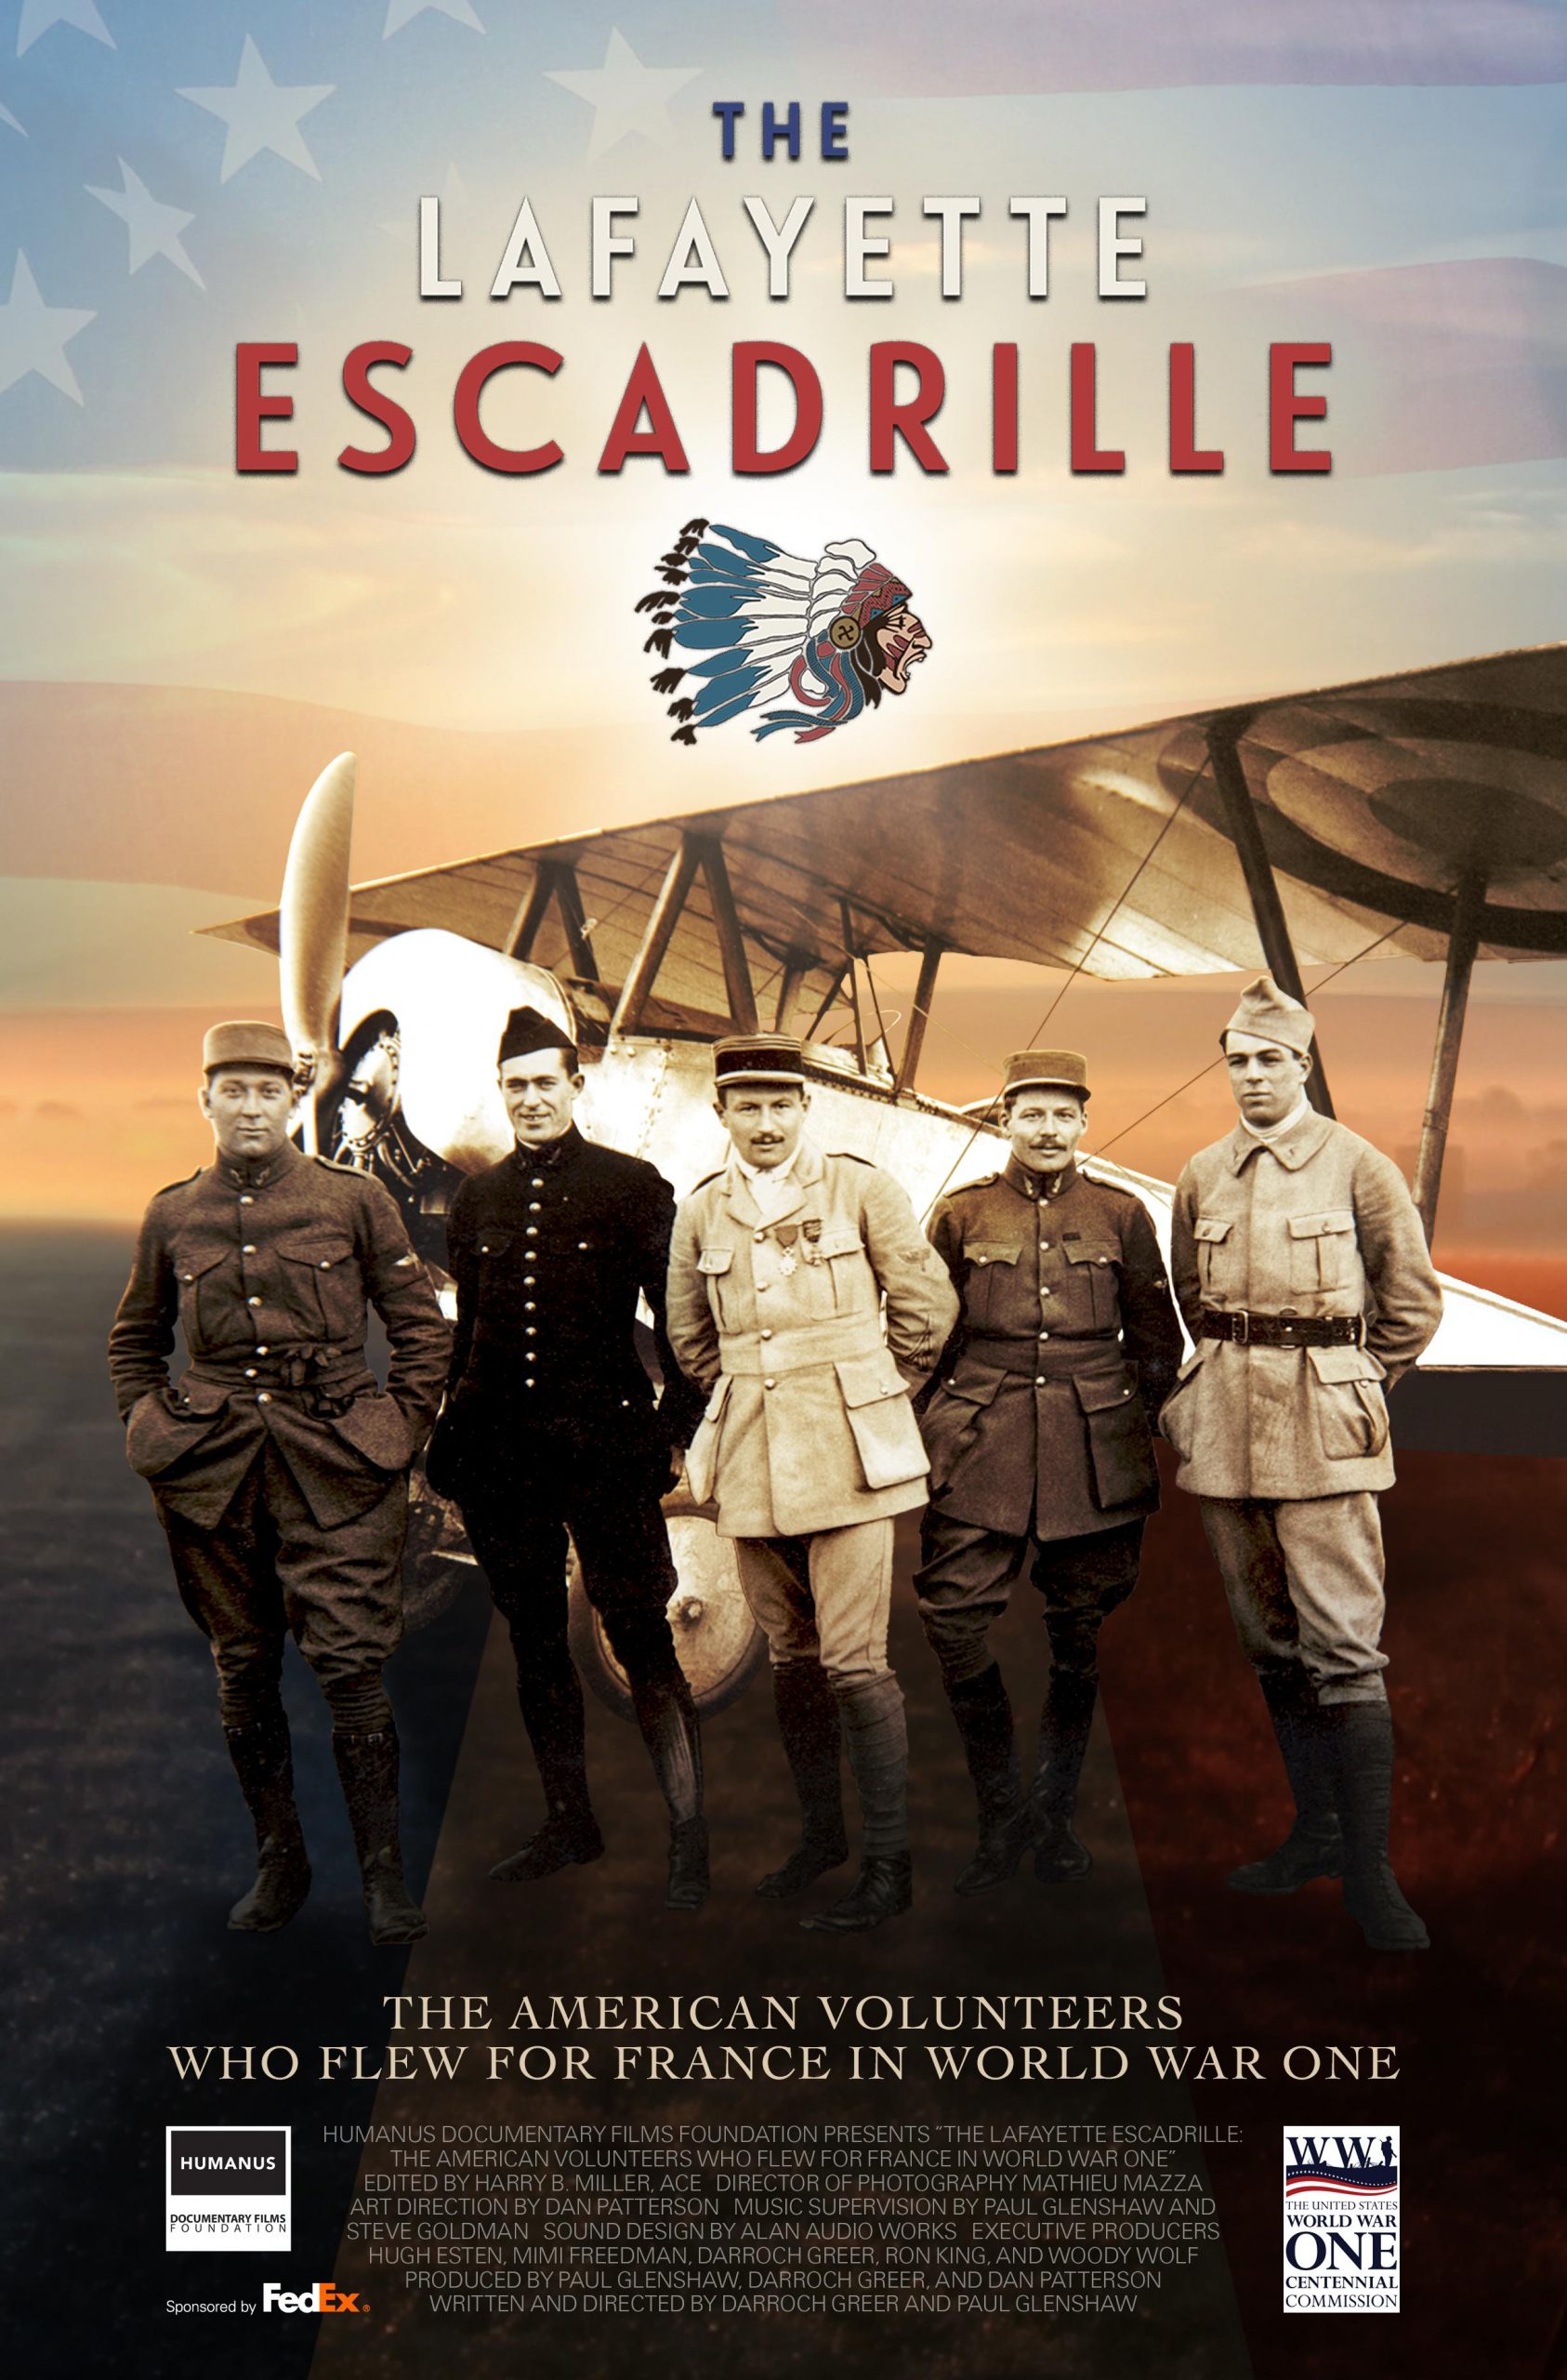 Lafayette Escadrille